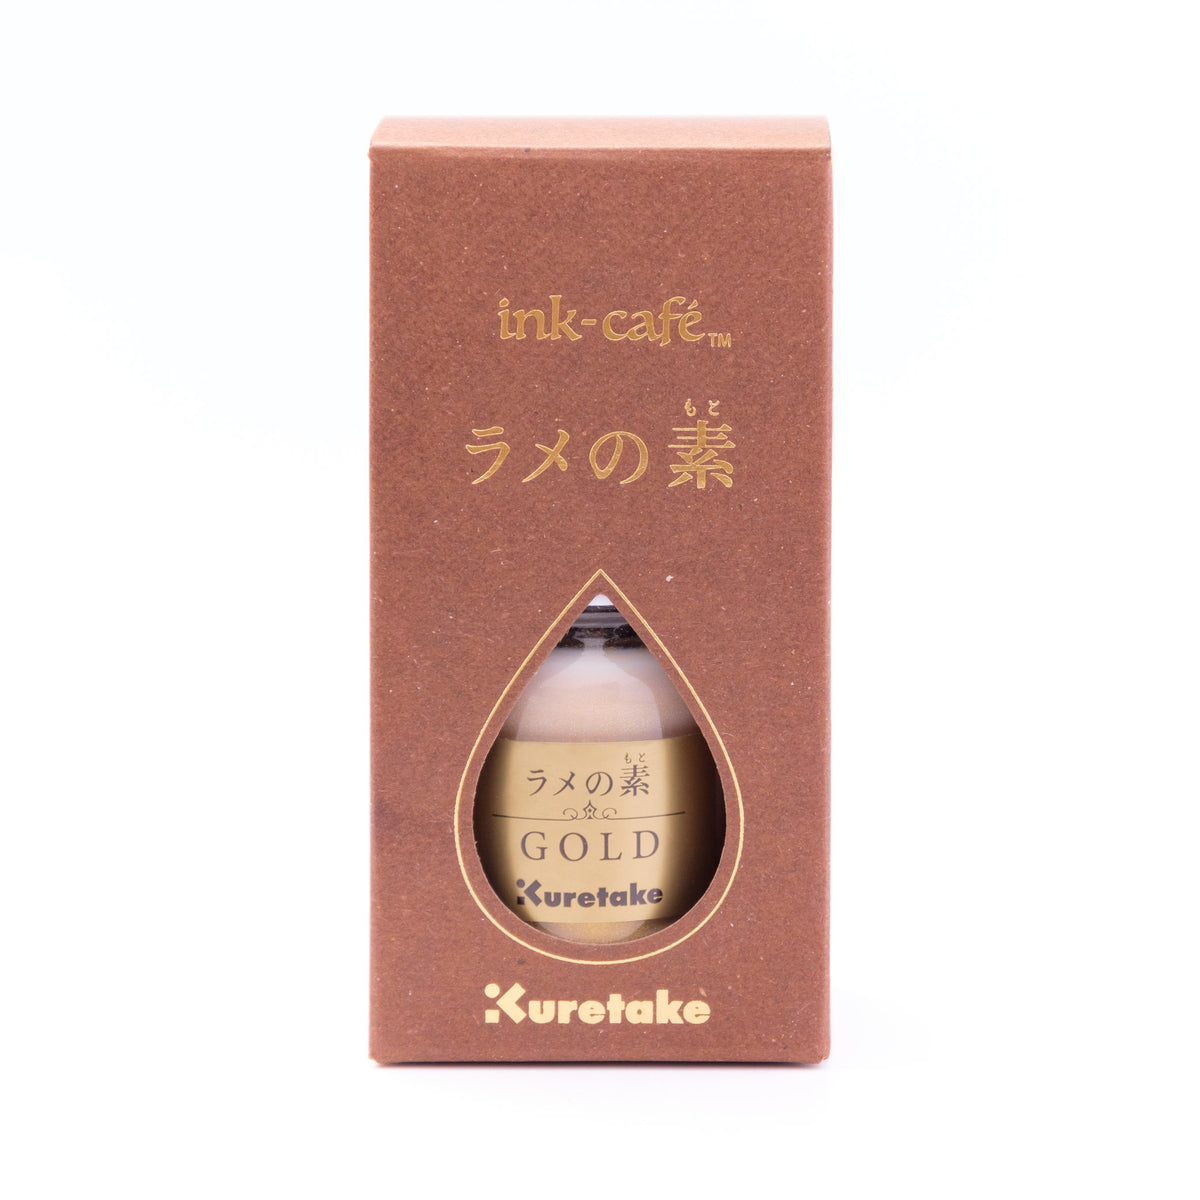 ink-café ラメの素 GOLD | 八文字屋OnlineStore